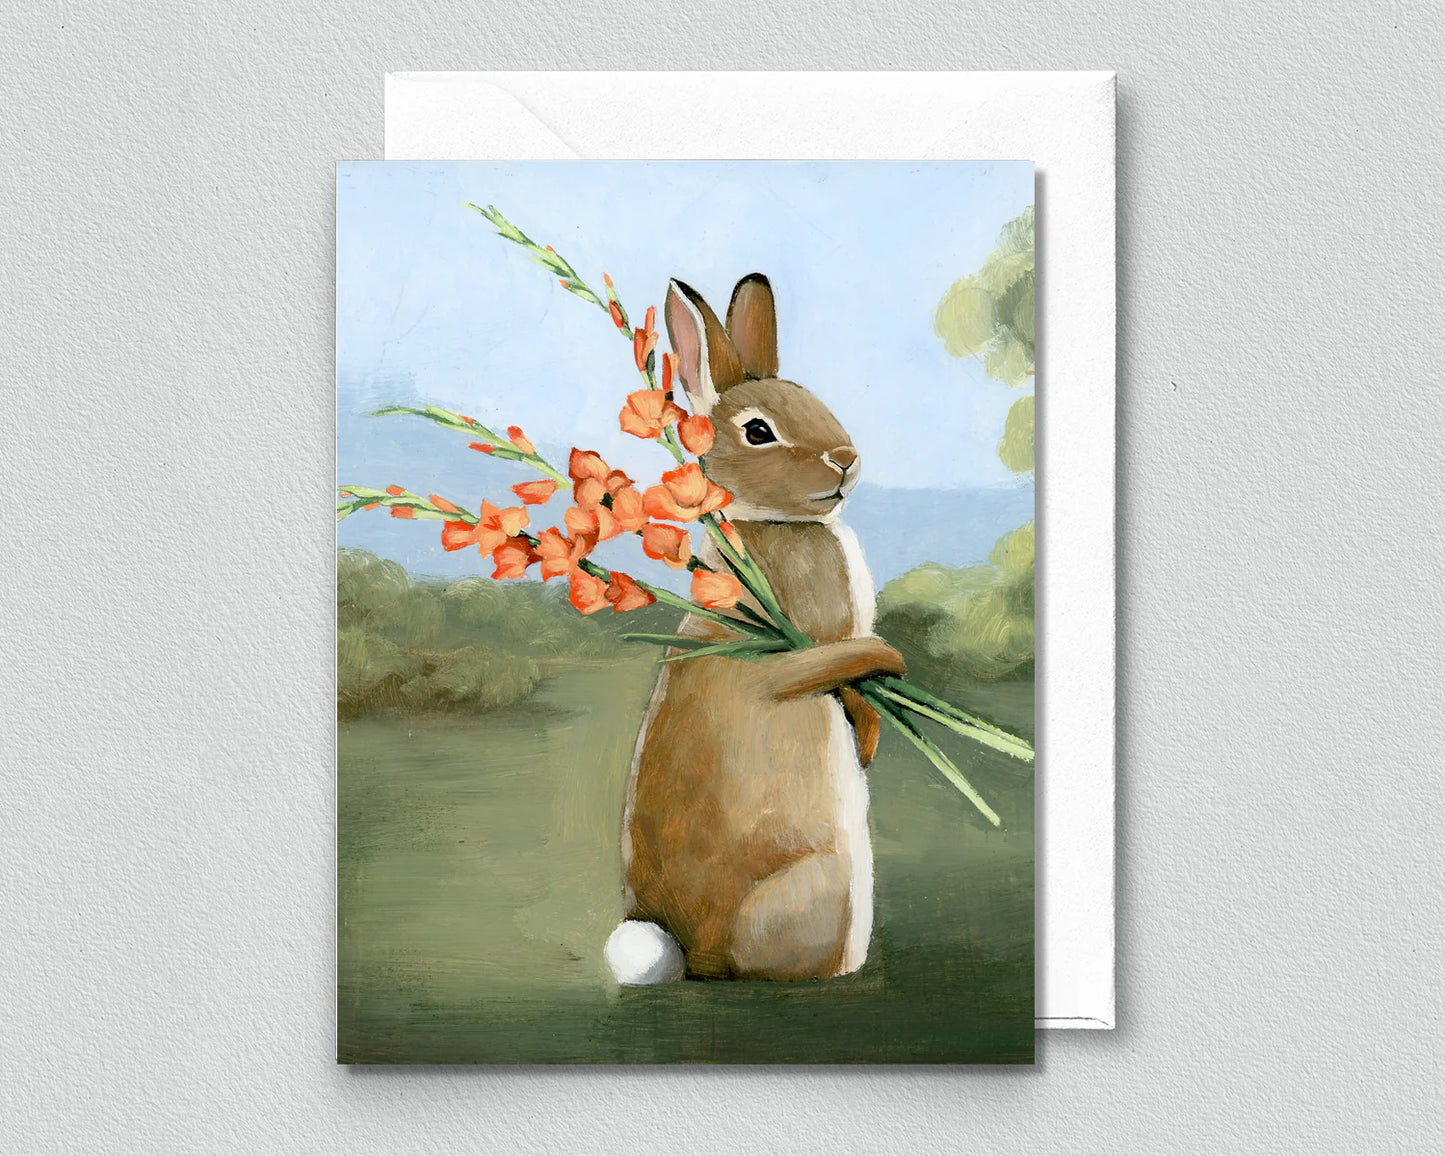 Rabbit with Gladiolus Greeting Card (blank inside) by Kim Ferreira (Joie de Vivre)